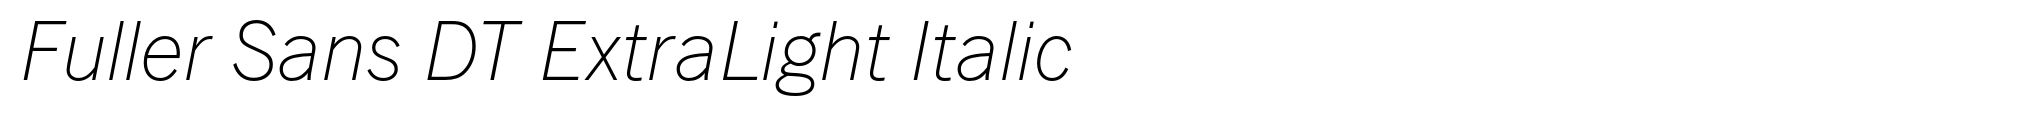 Fuller Sans DT ExtraLight Italic image